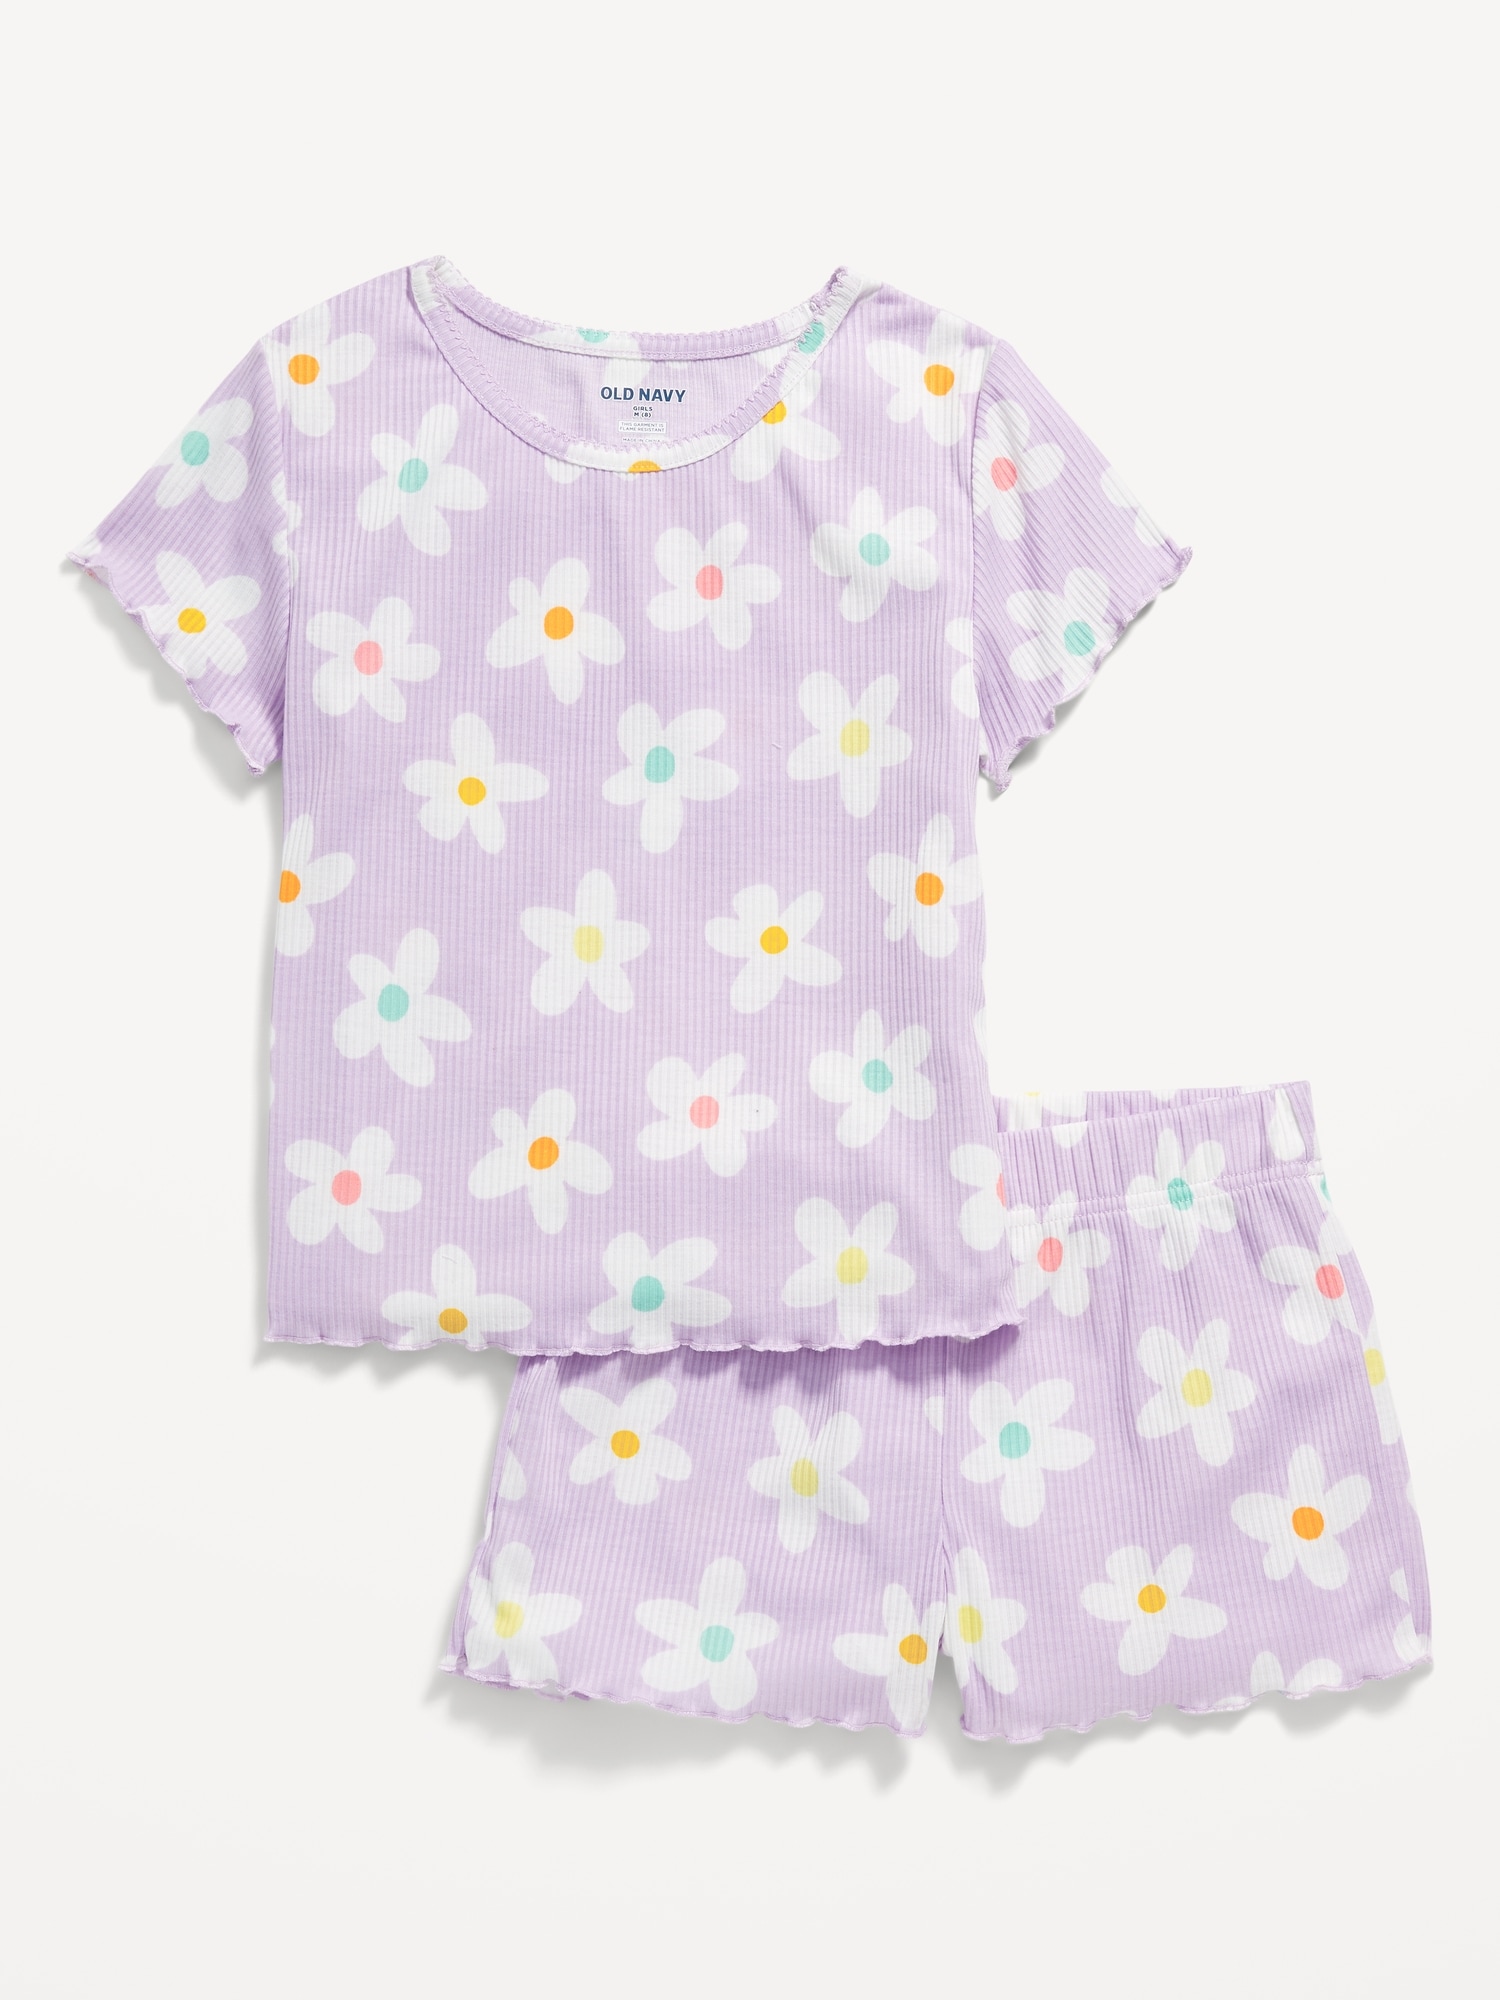 Printed Pajama Top and Shorts Set for Girls